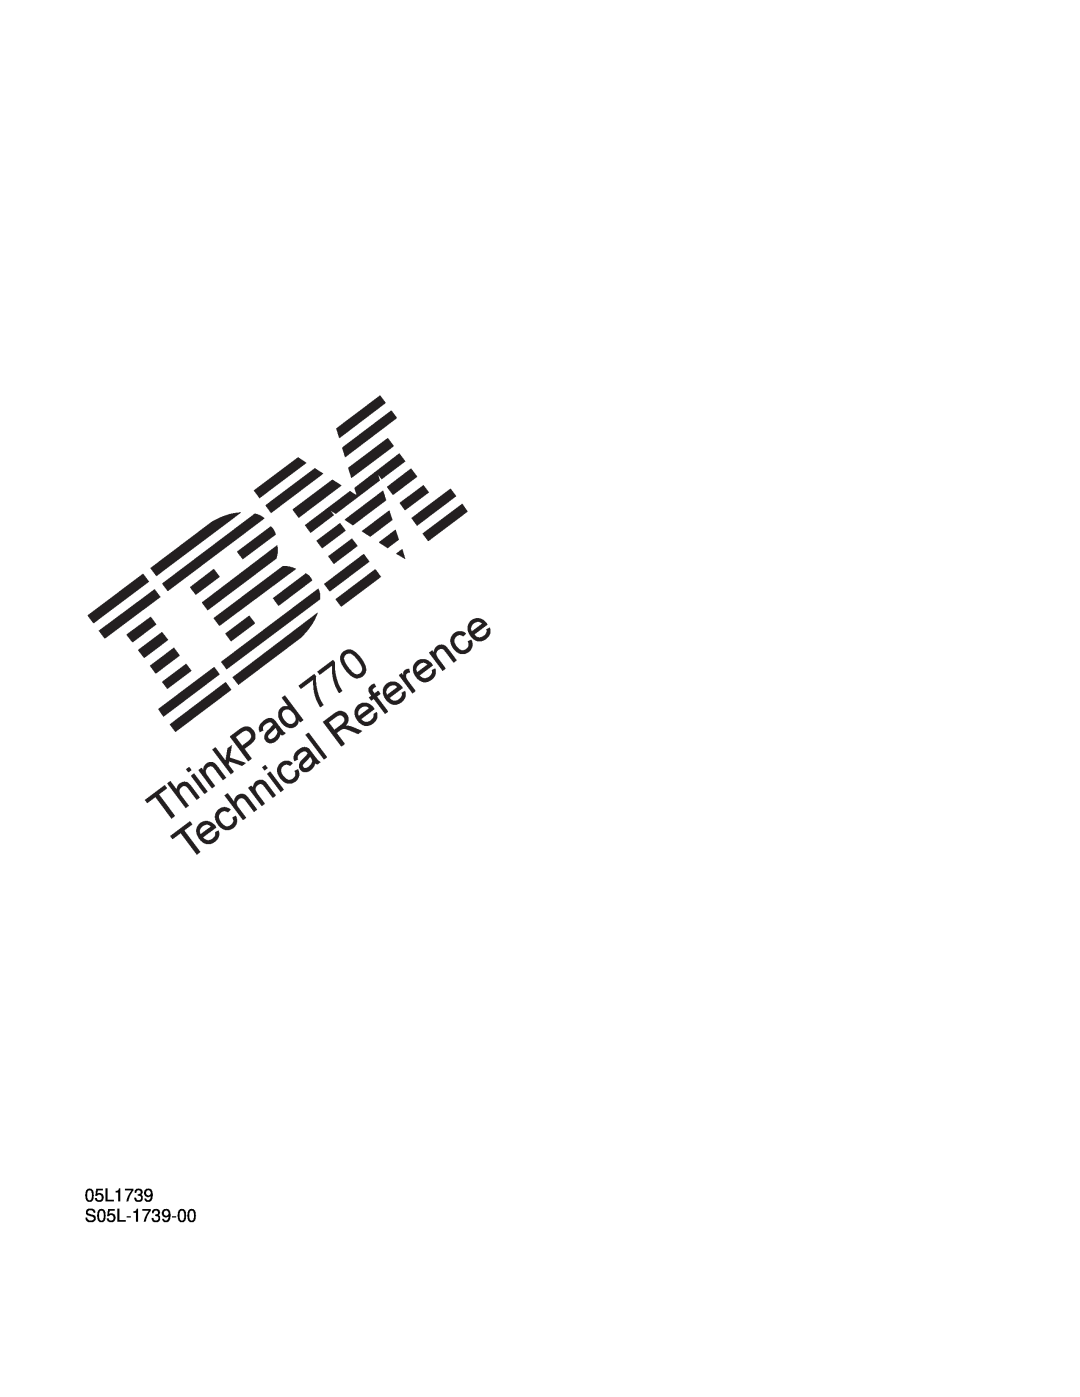 IBM 770 manual 05L1739 S05L-1739-00 